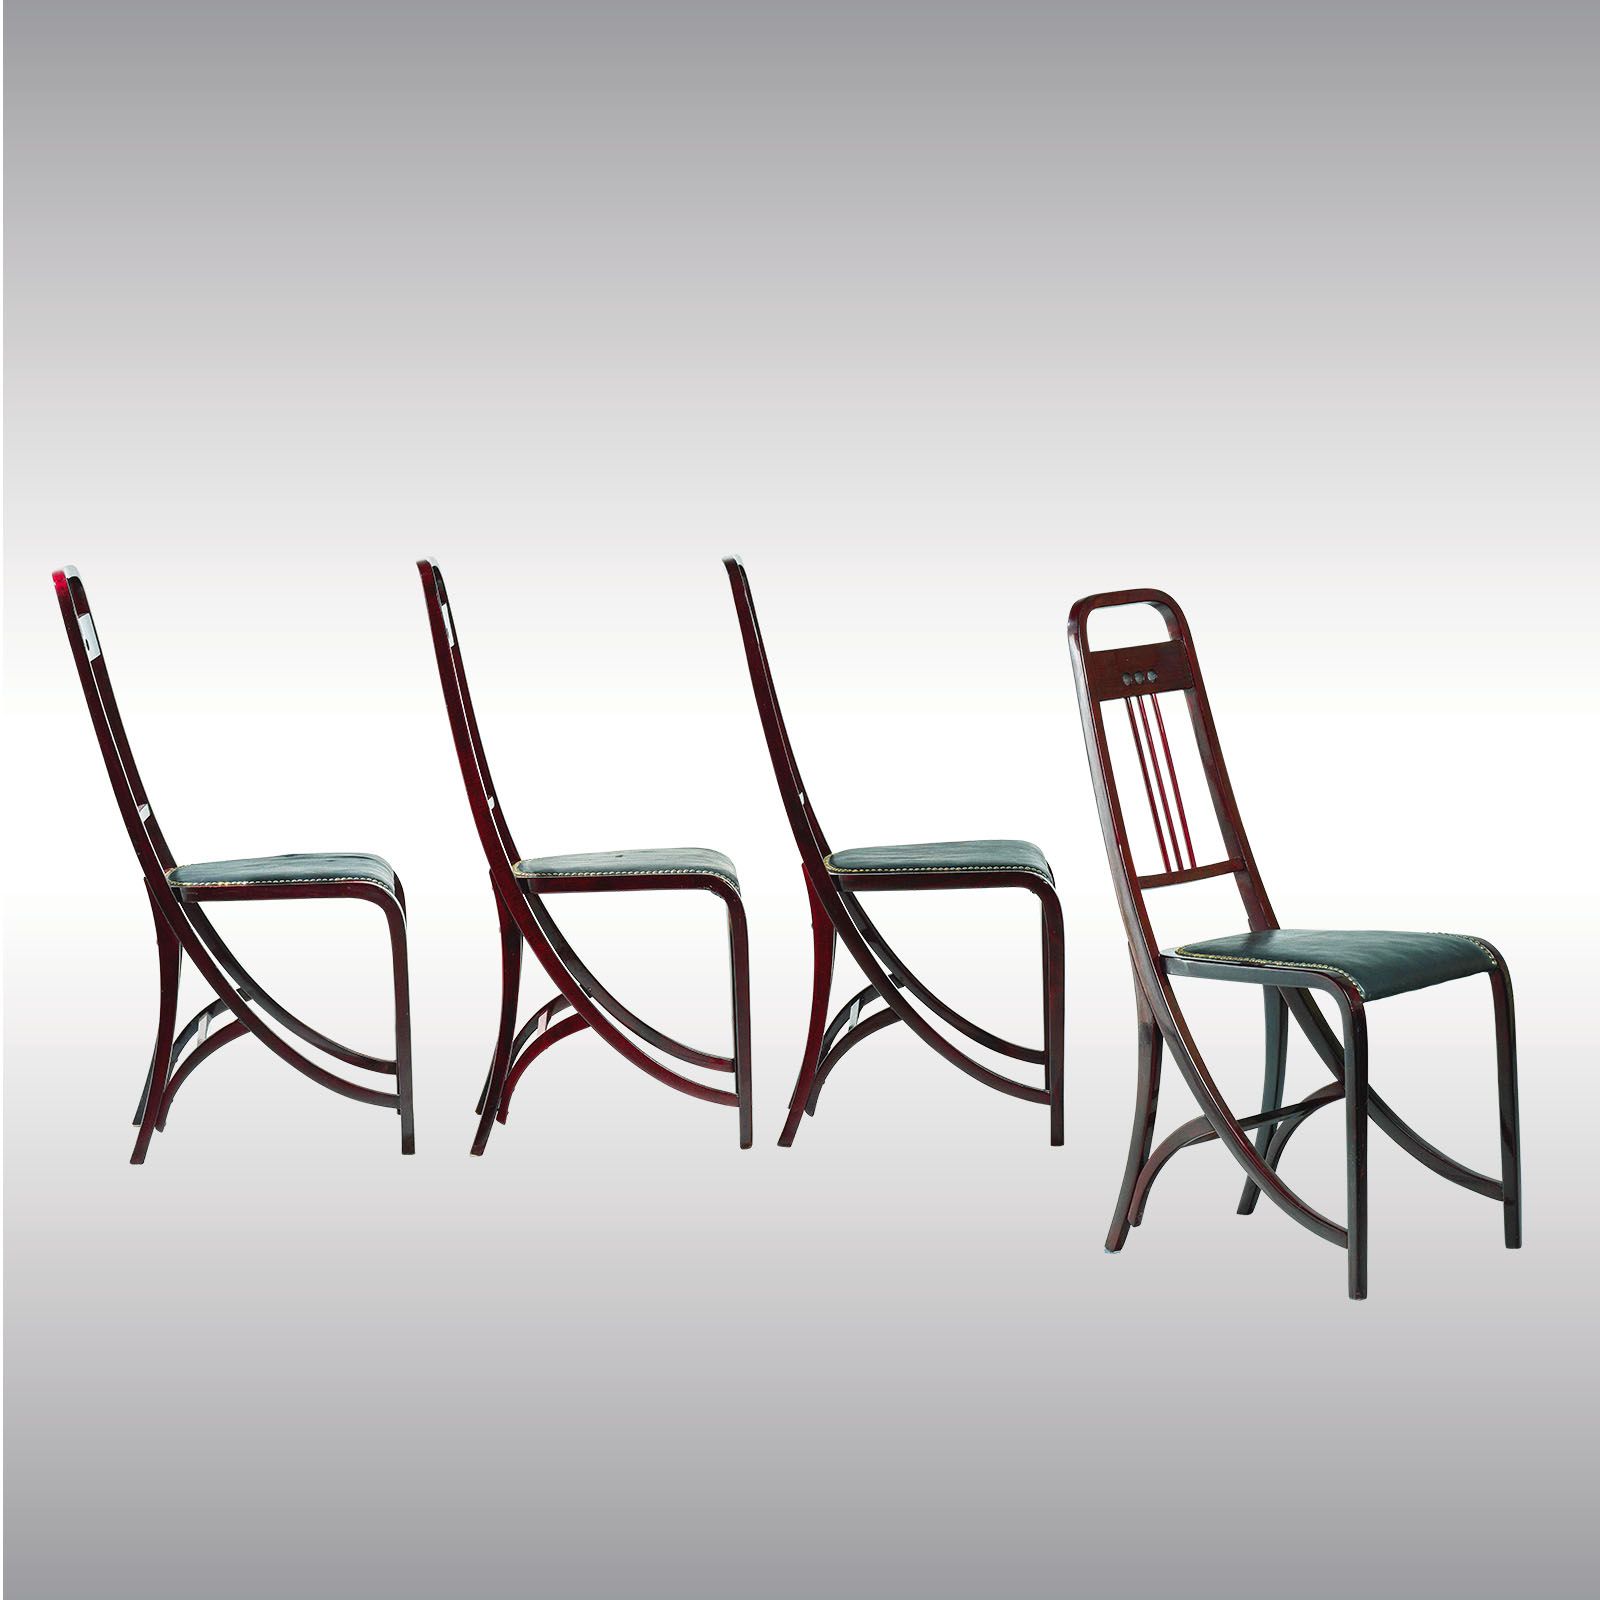 WOKA LAMPS VIENNA - OrderNr.: 50501|Set of four chairs 511 from 1904, Gebrüder Thonet - Design: Thonet Gebrueder